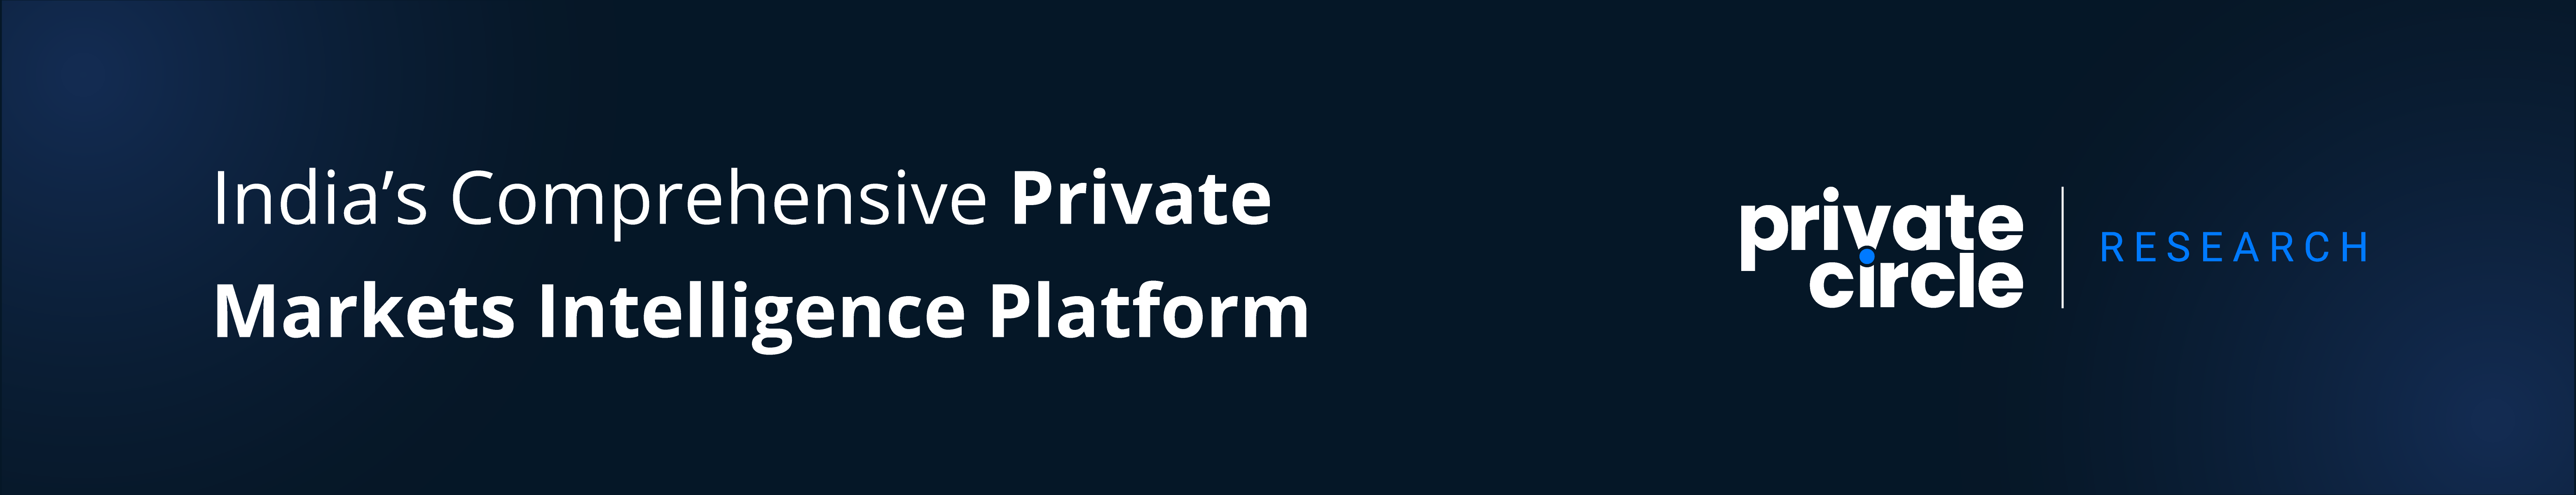 PrivateCircle Research - India's Comprehensive Private Markets Intelligence Platform. 